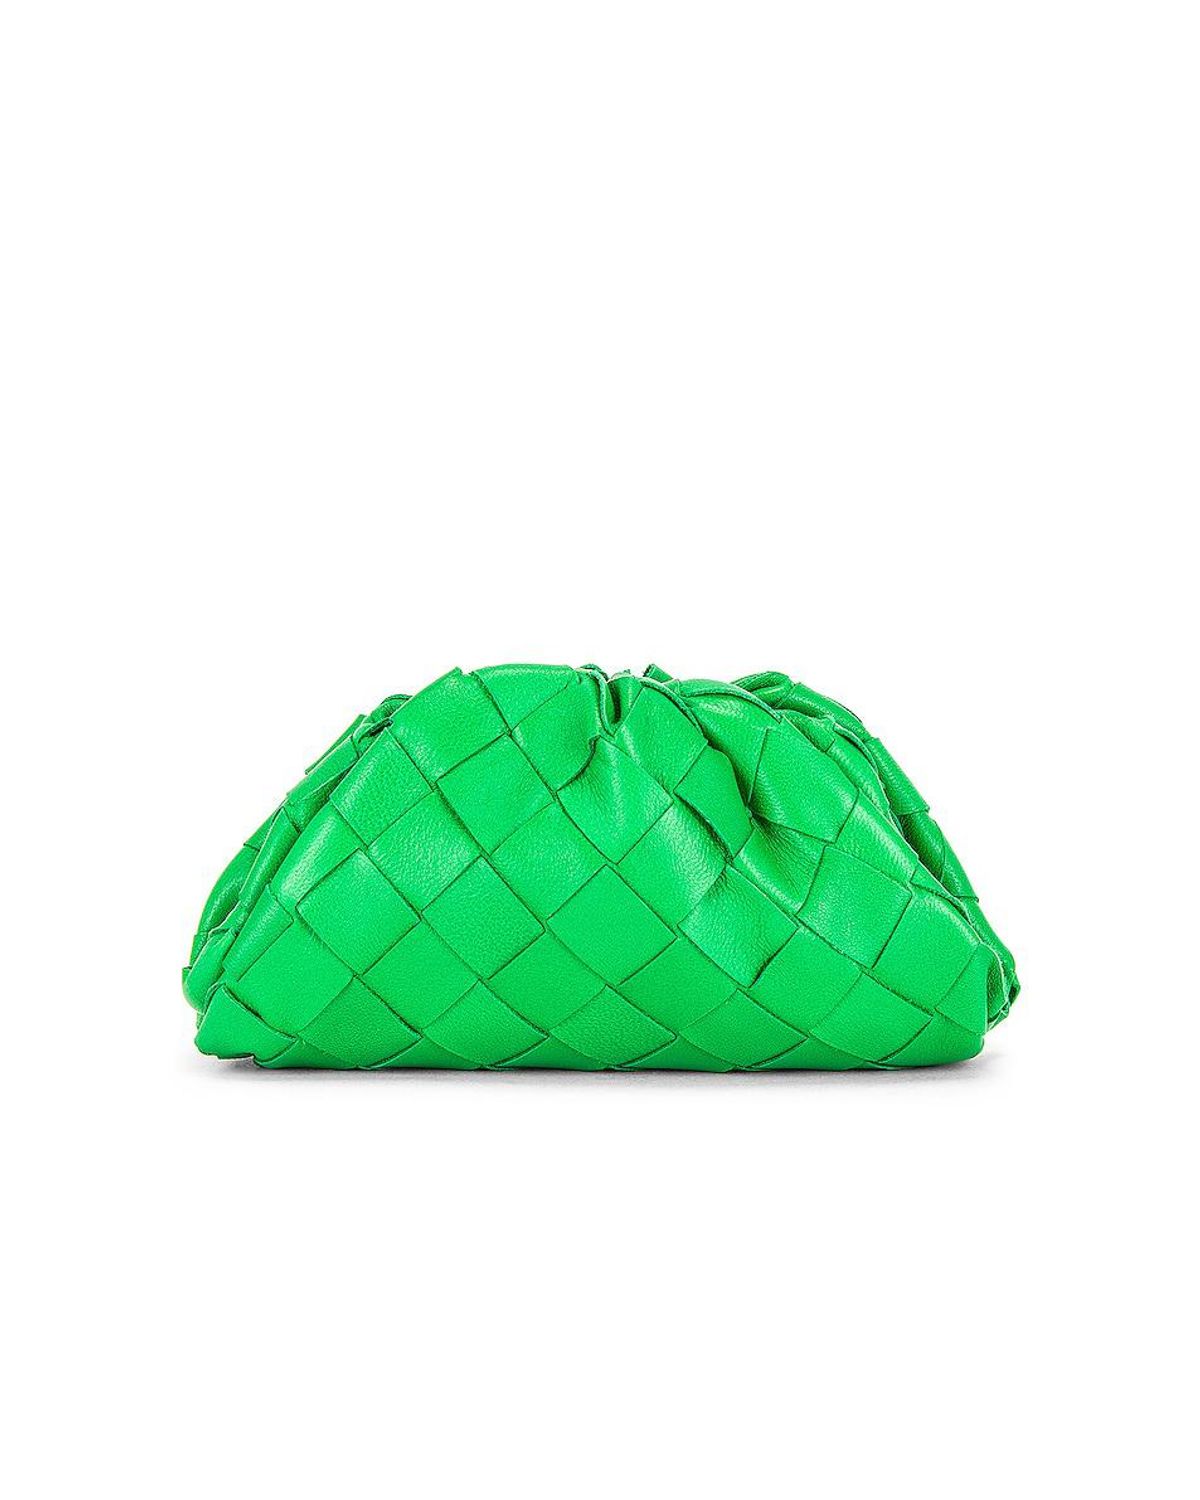 Crossbody Bag in Lime Green